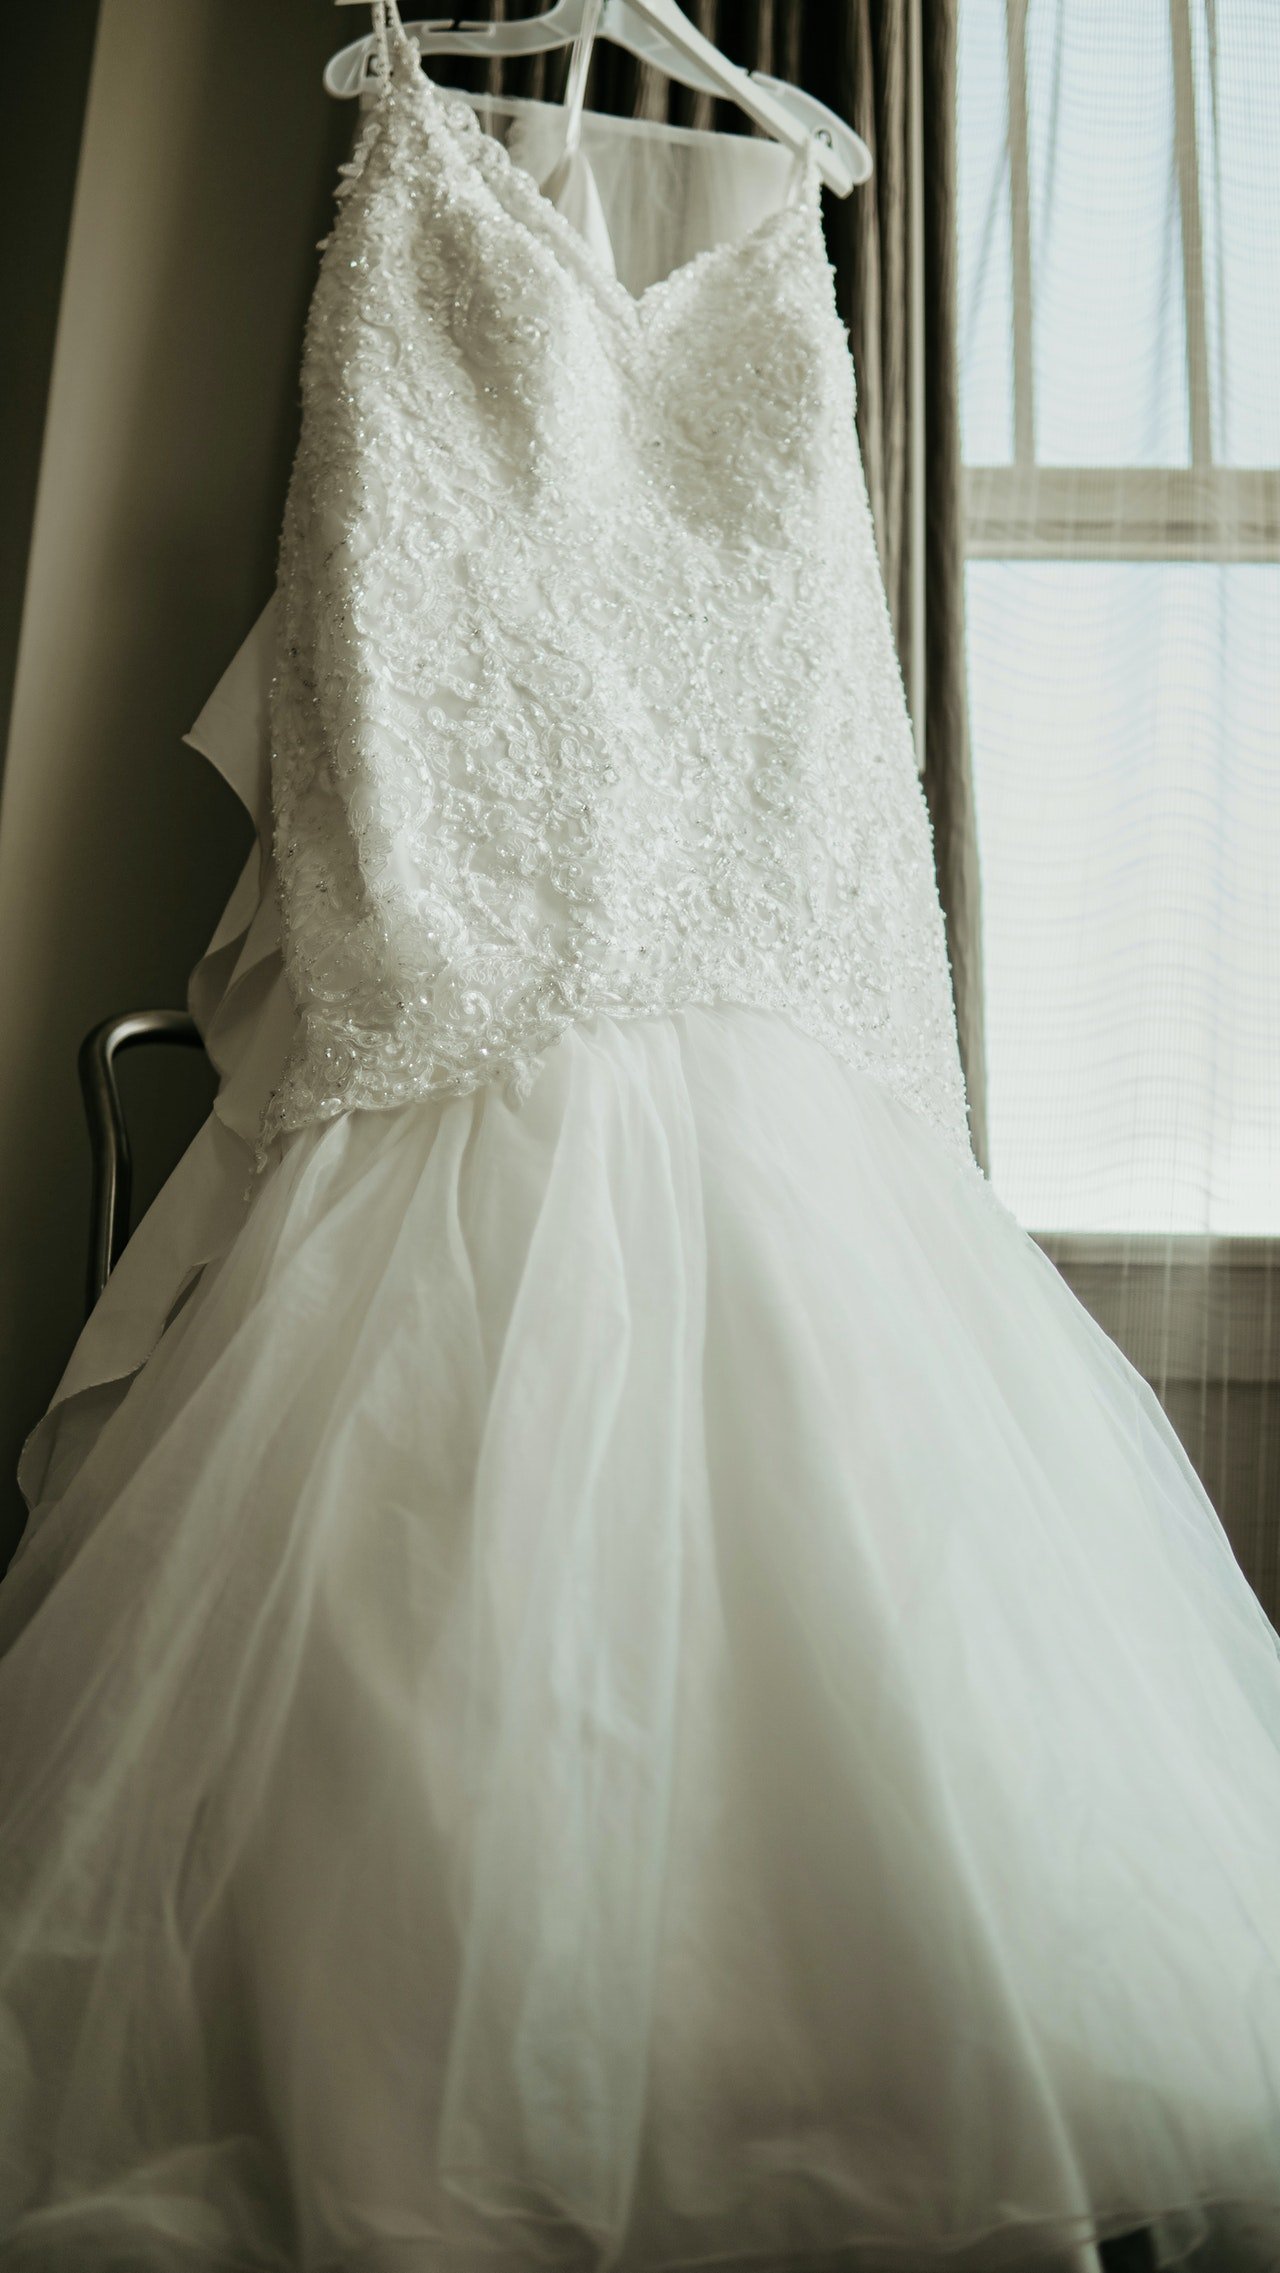 Vestido de novia. | Foto: Pexels